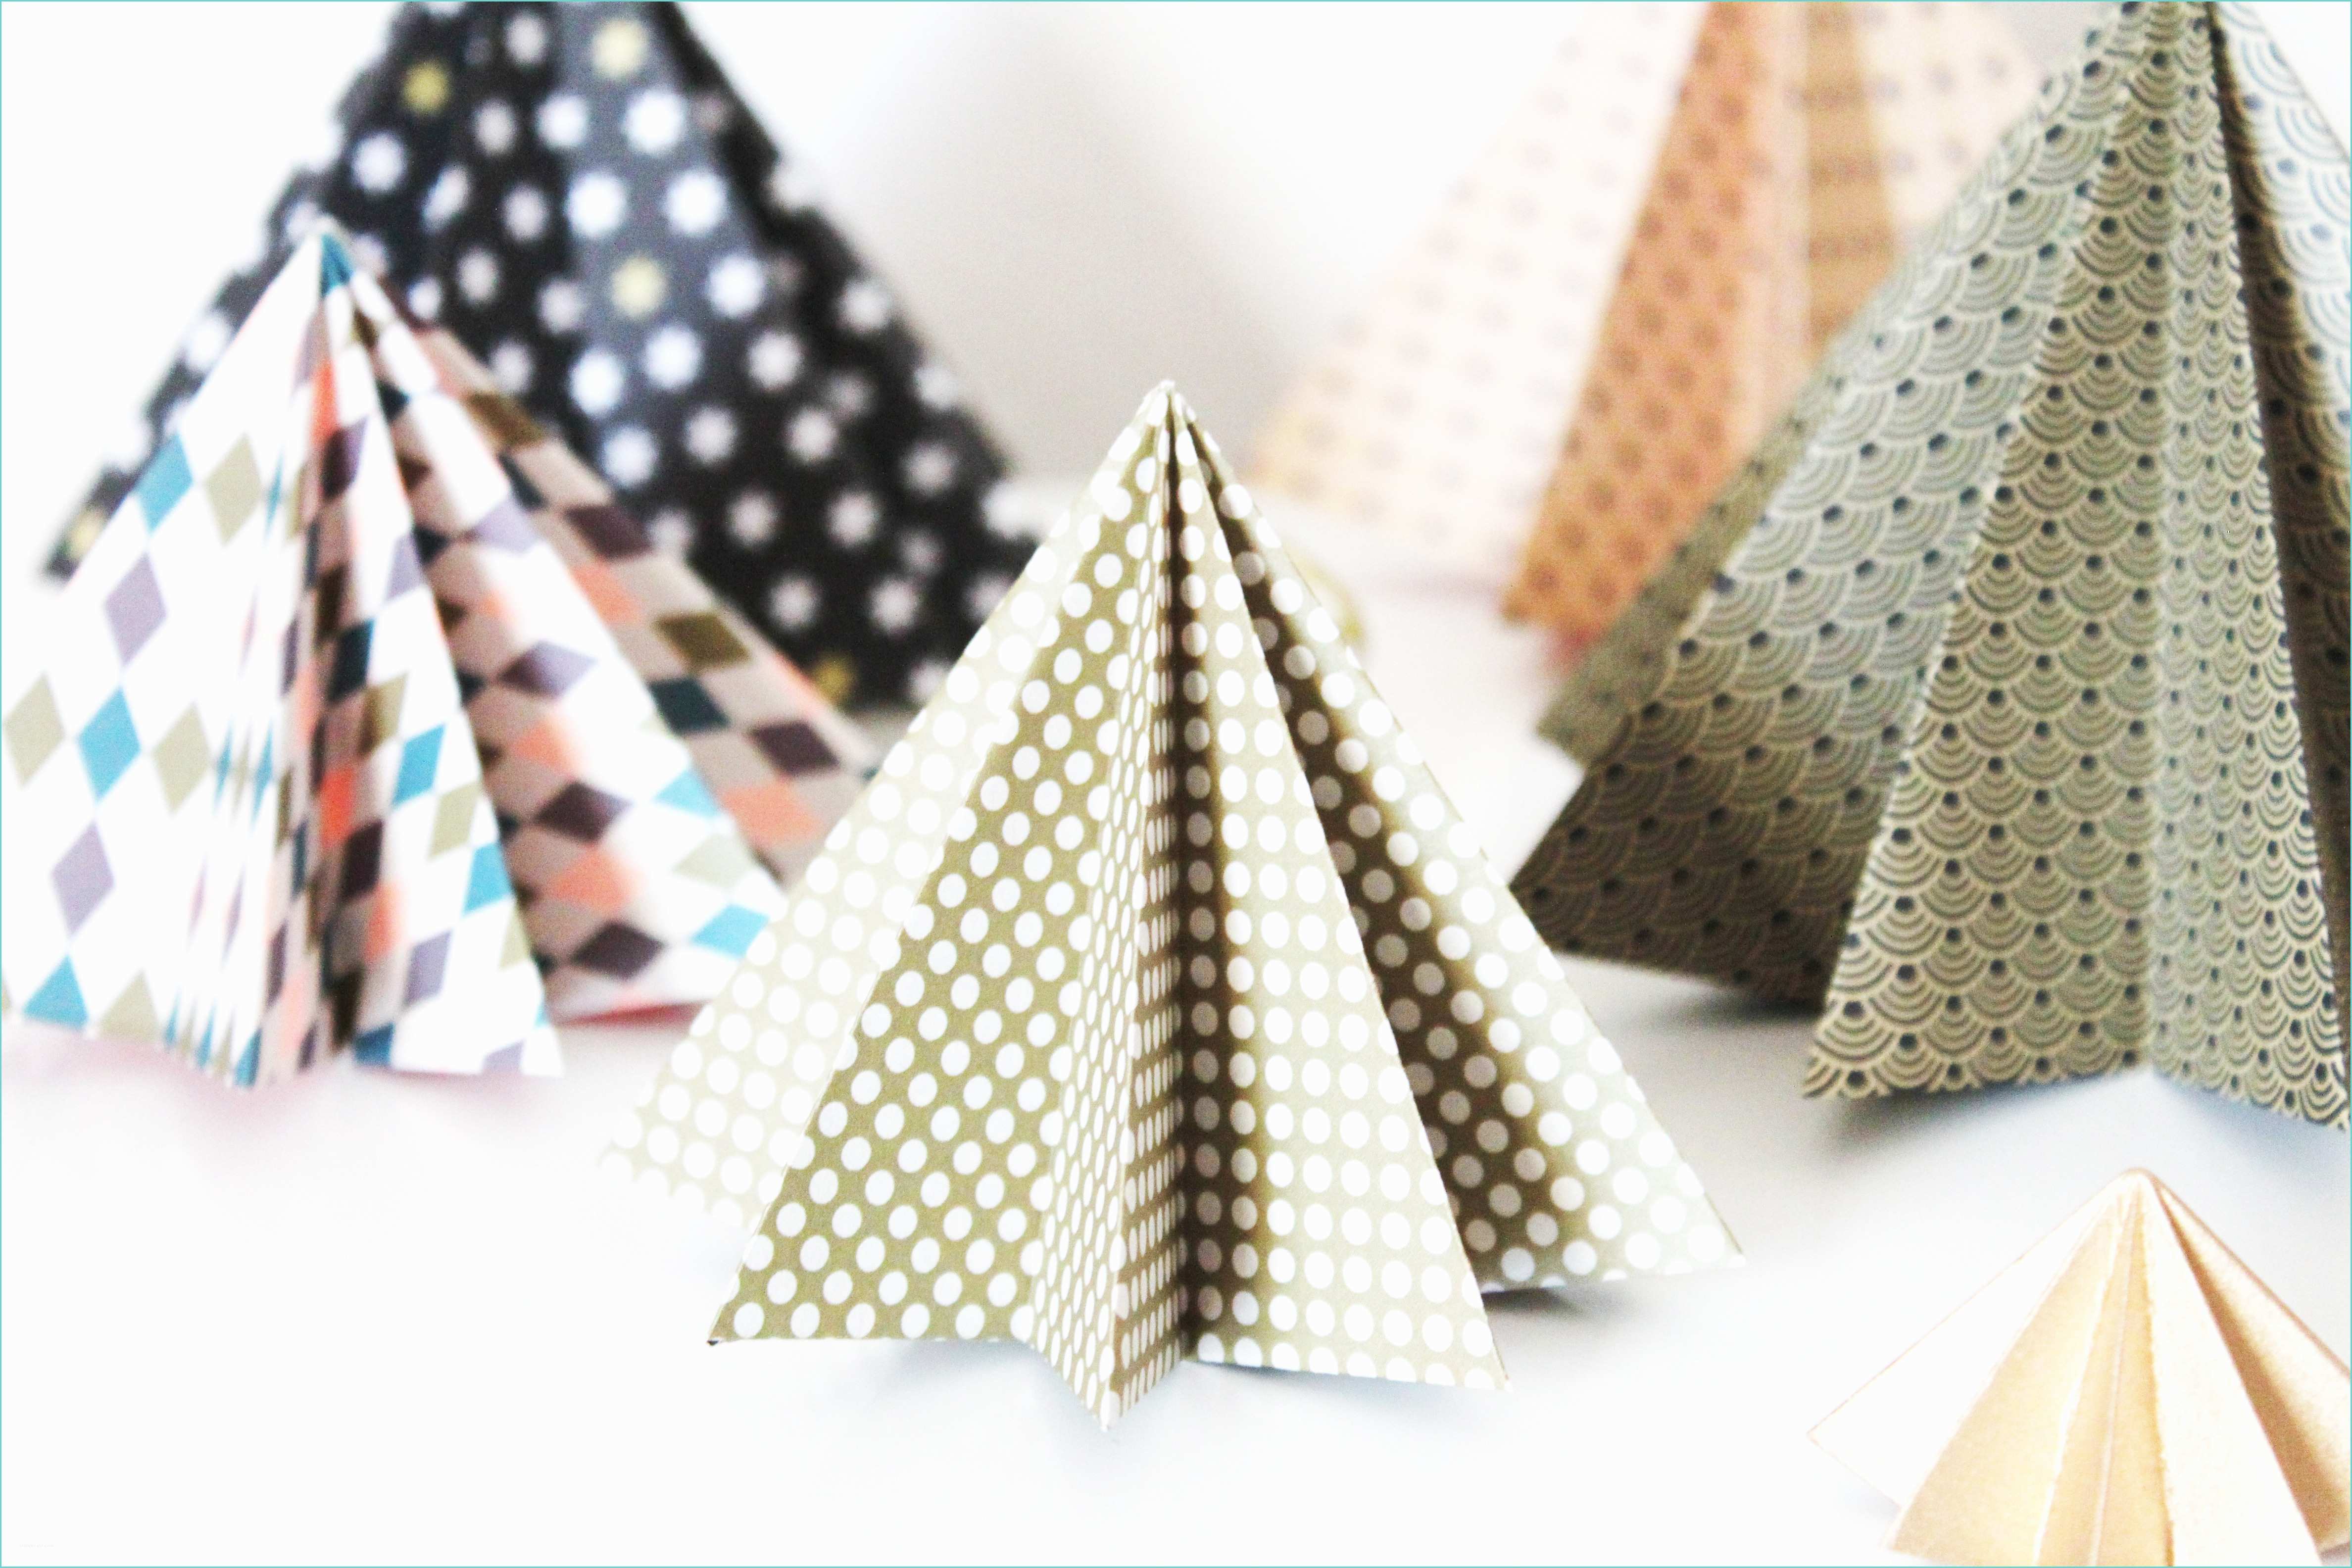 Origami Facile De Noel origami Sapin De Noel Facile – Obasinc